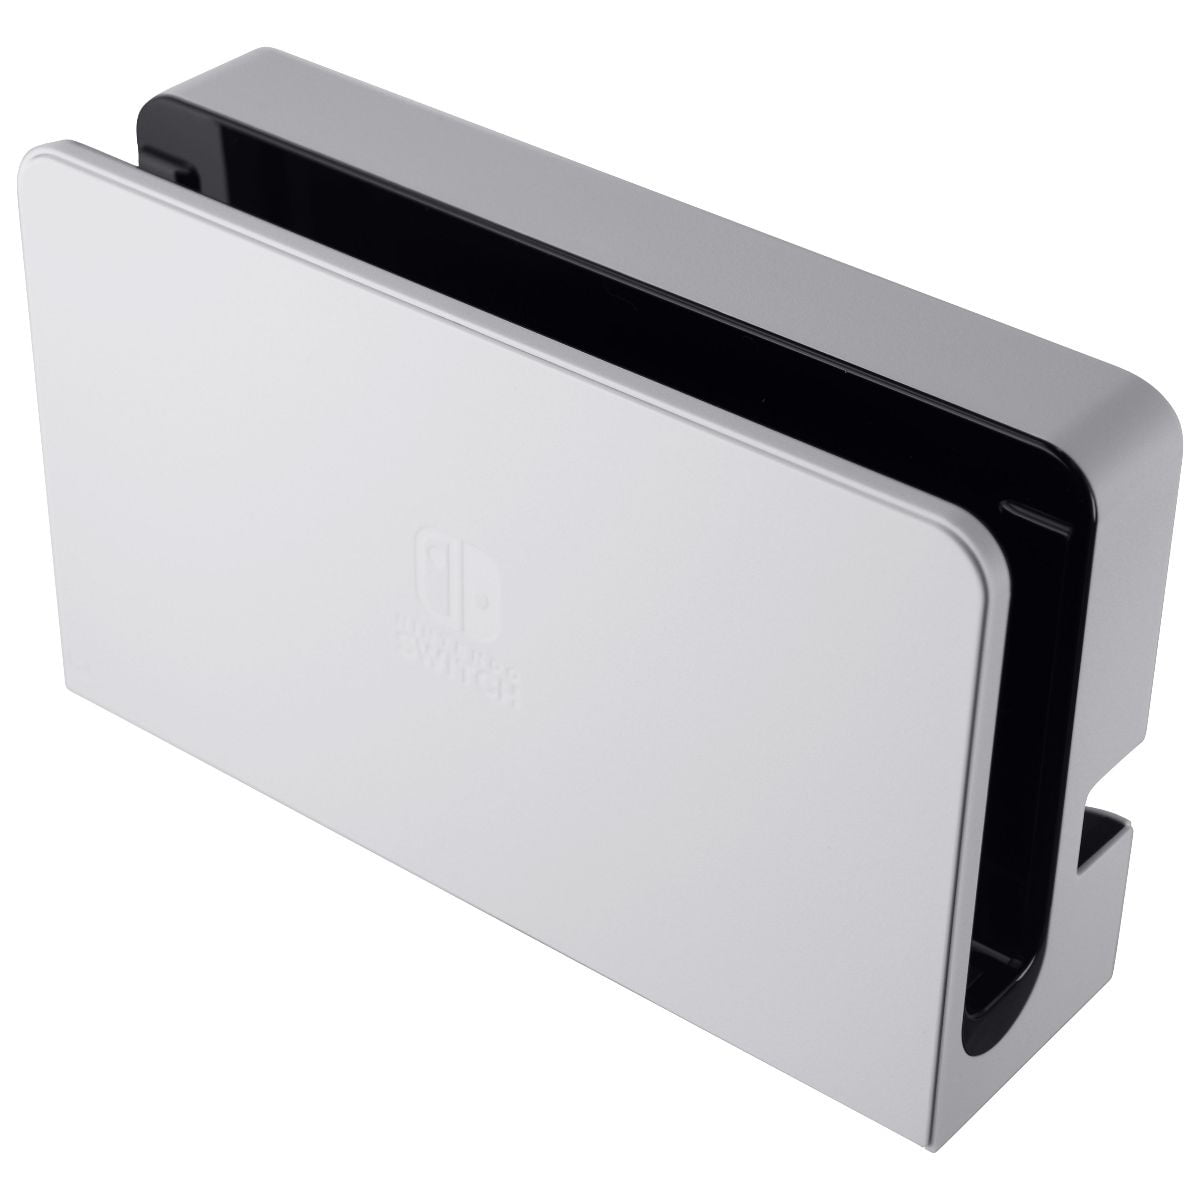 Nintendo Switch OLED Dock (with LAN Port) - White (Dock ONLY, Bulk